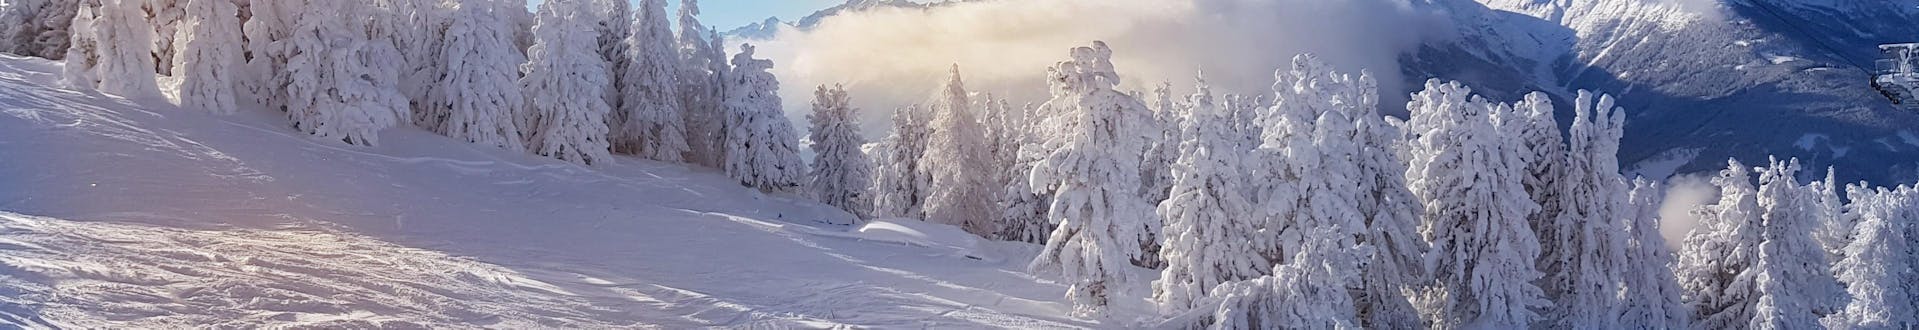 Skier on the slopes of Igls, Austria near the ski lift.